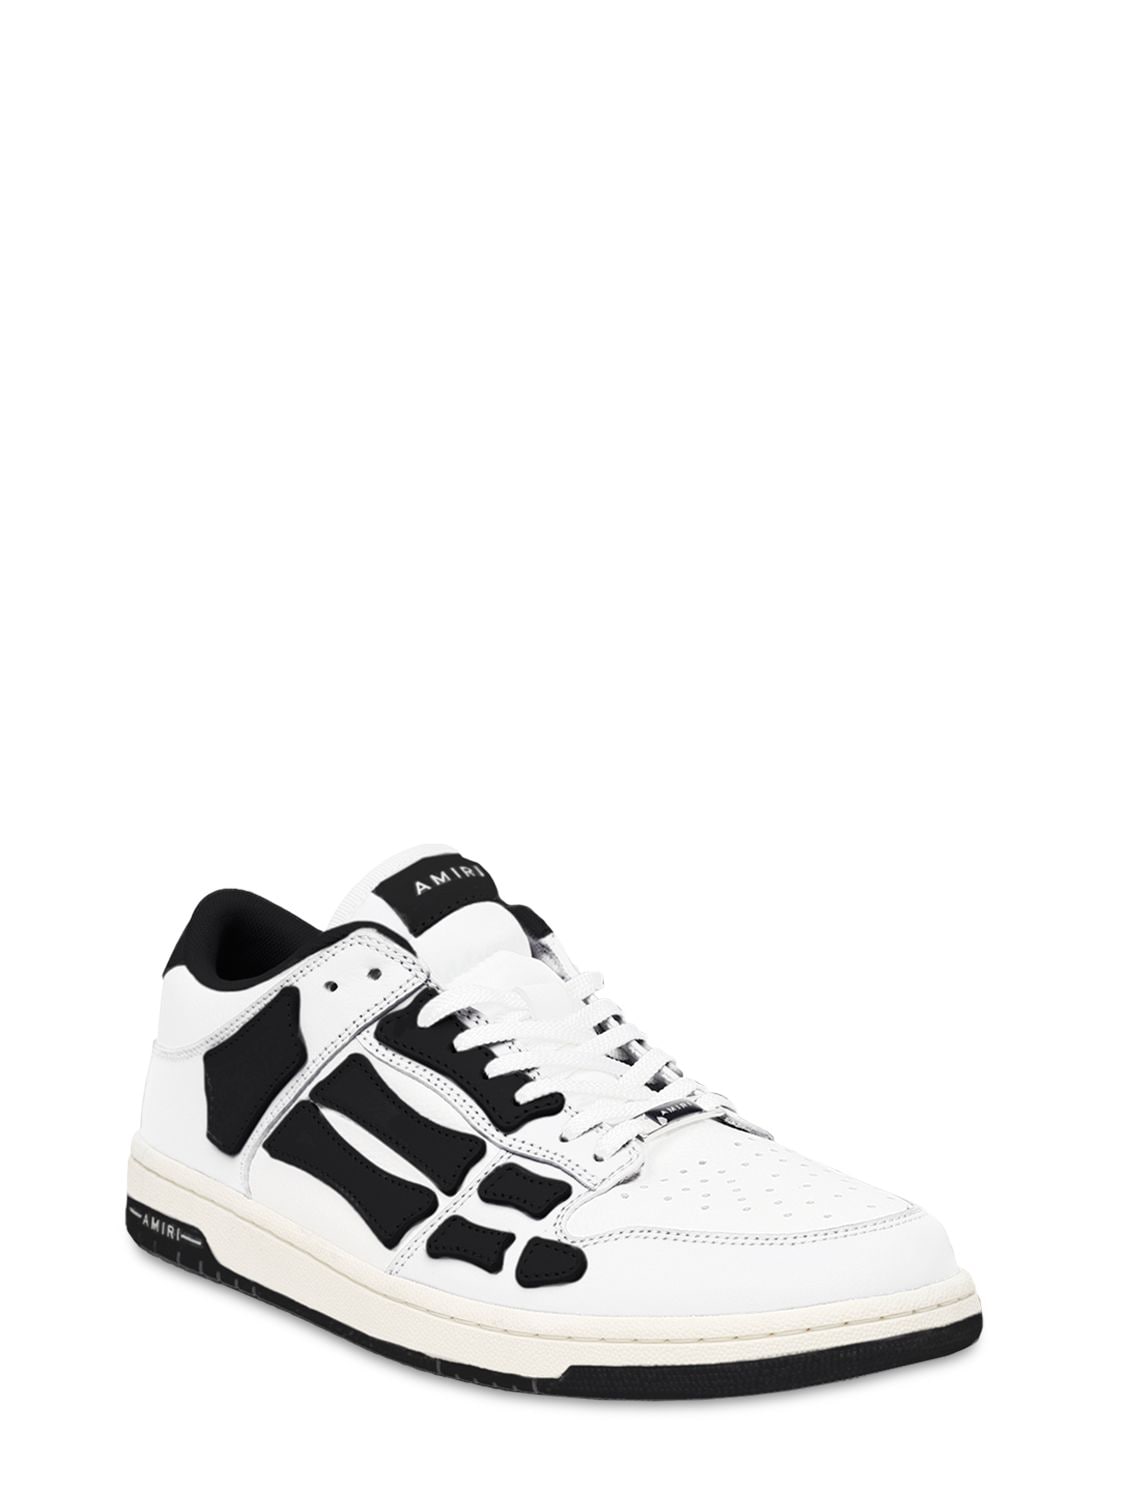 Amiri Black & White Skel Top Low Sneakers In Black / White | ModeSens